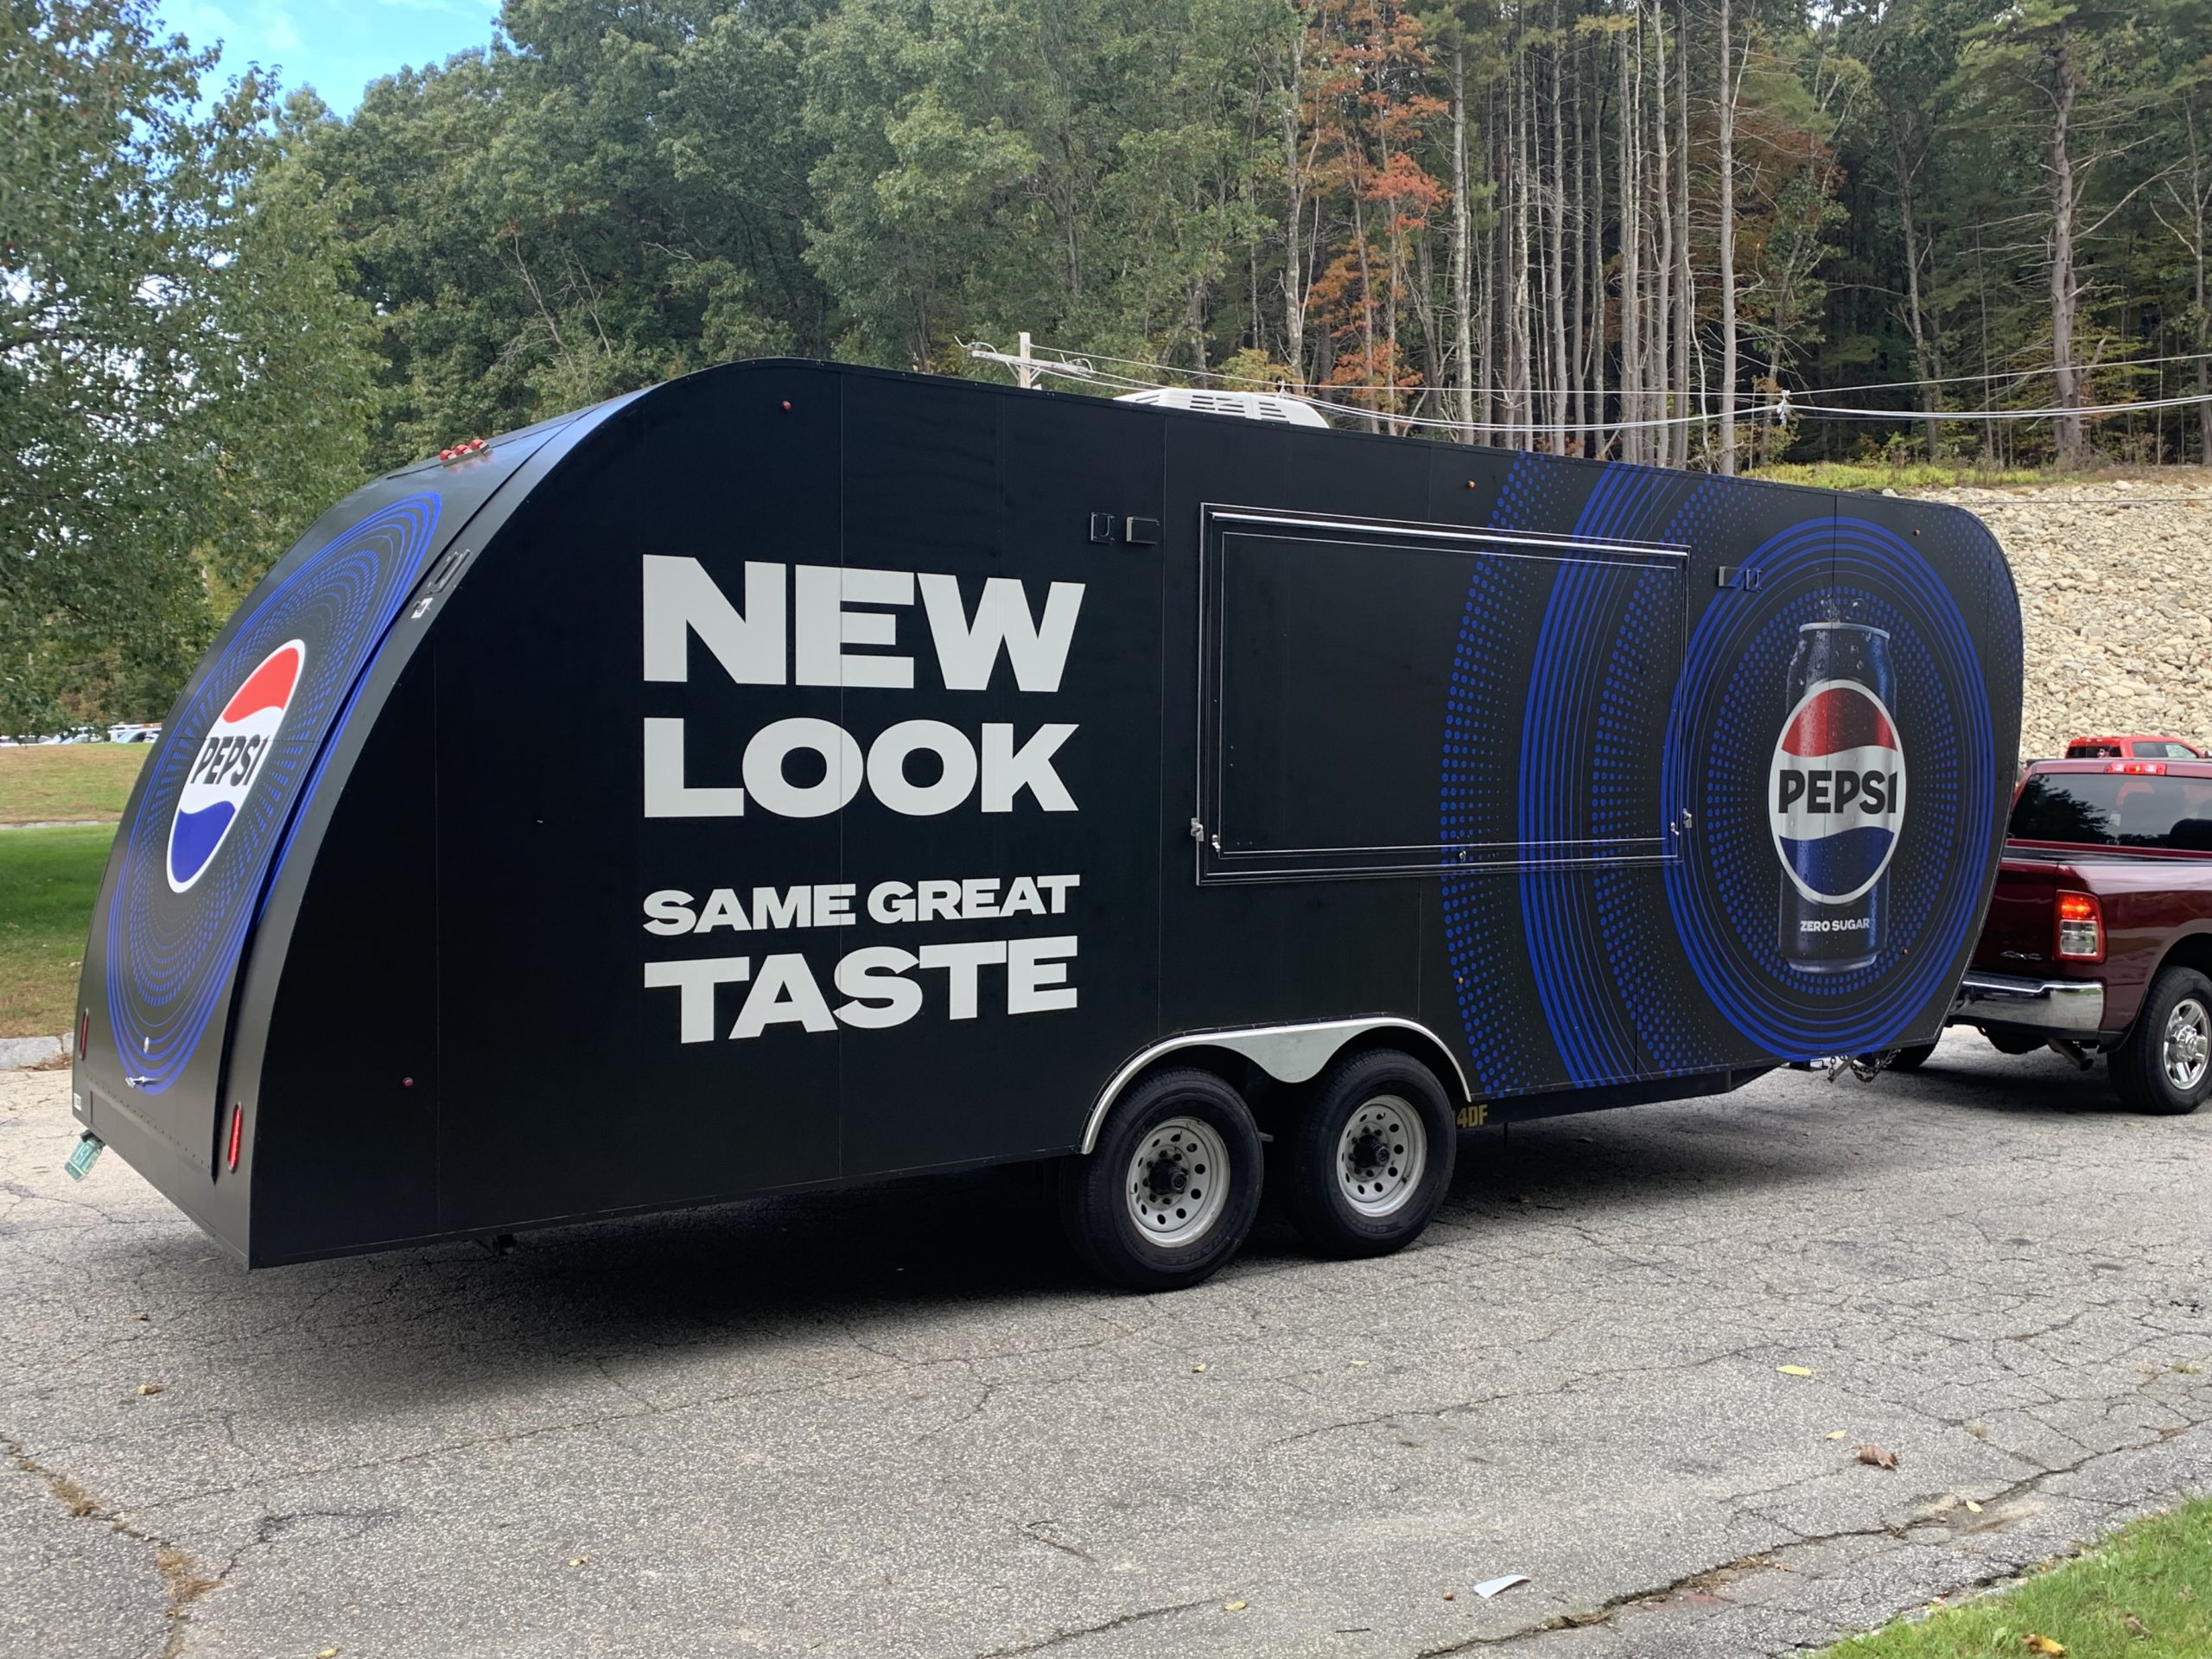 Pepsi marketing trailer built by Turtle Transit